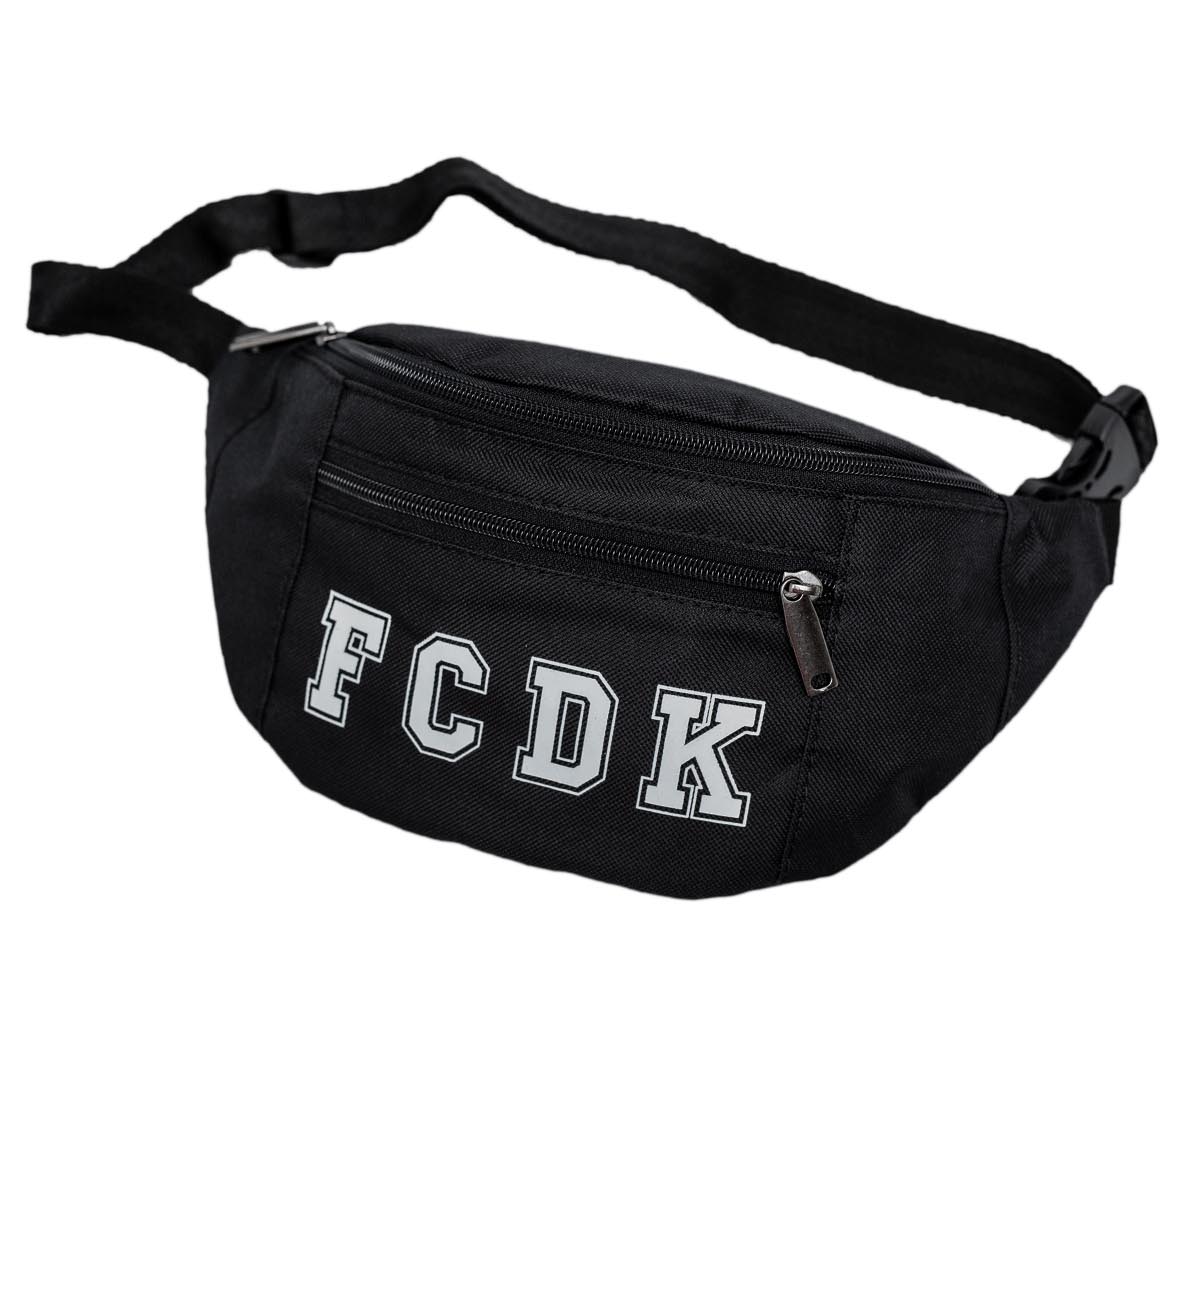 Black belt pouch "FCDK 1927"